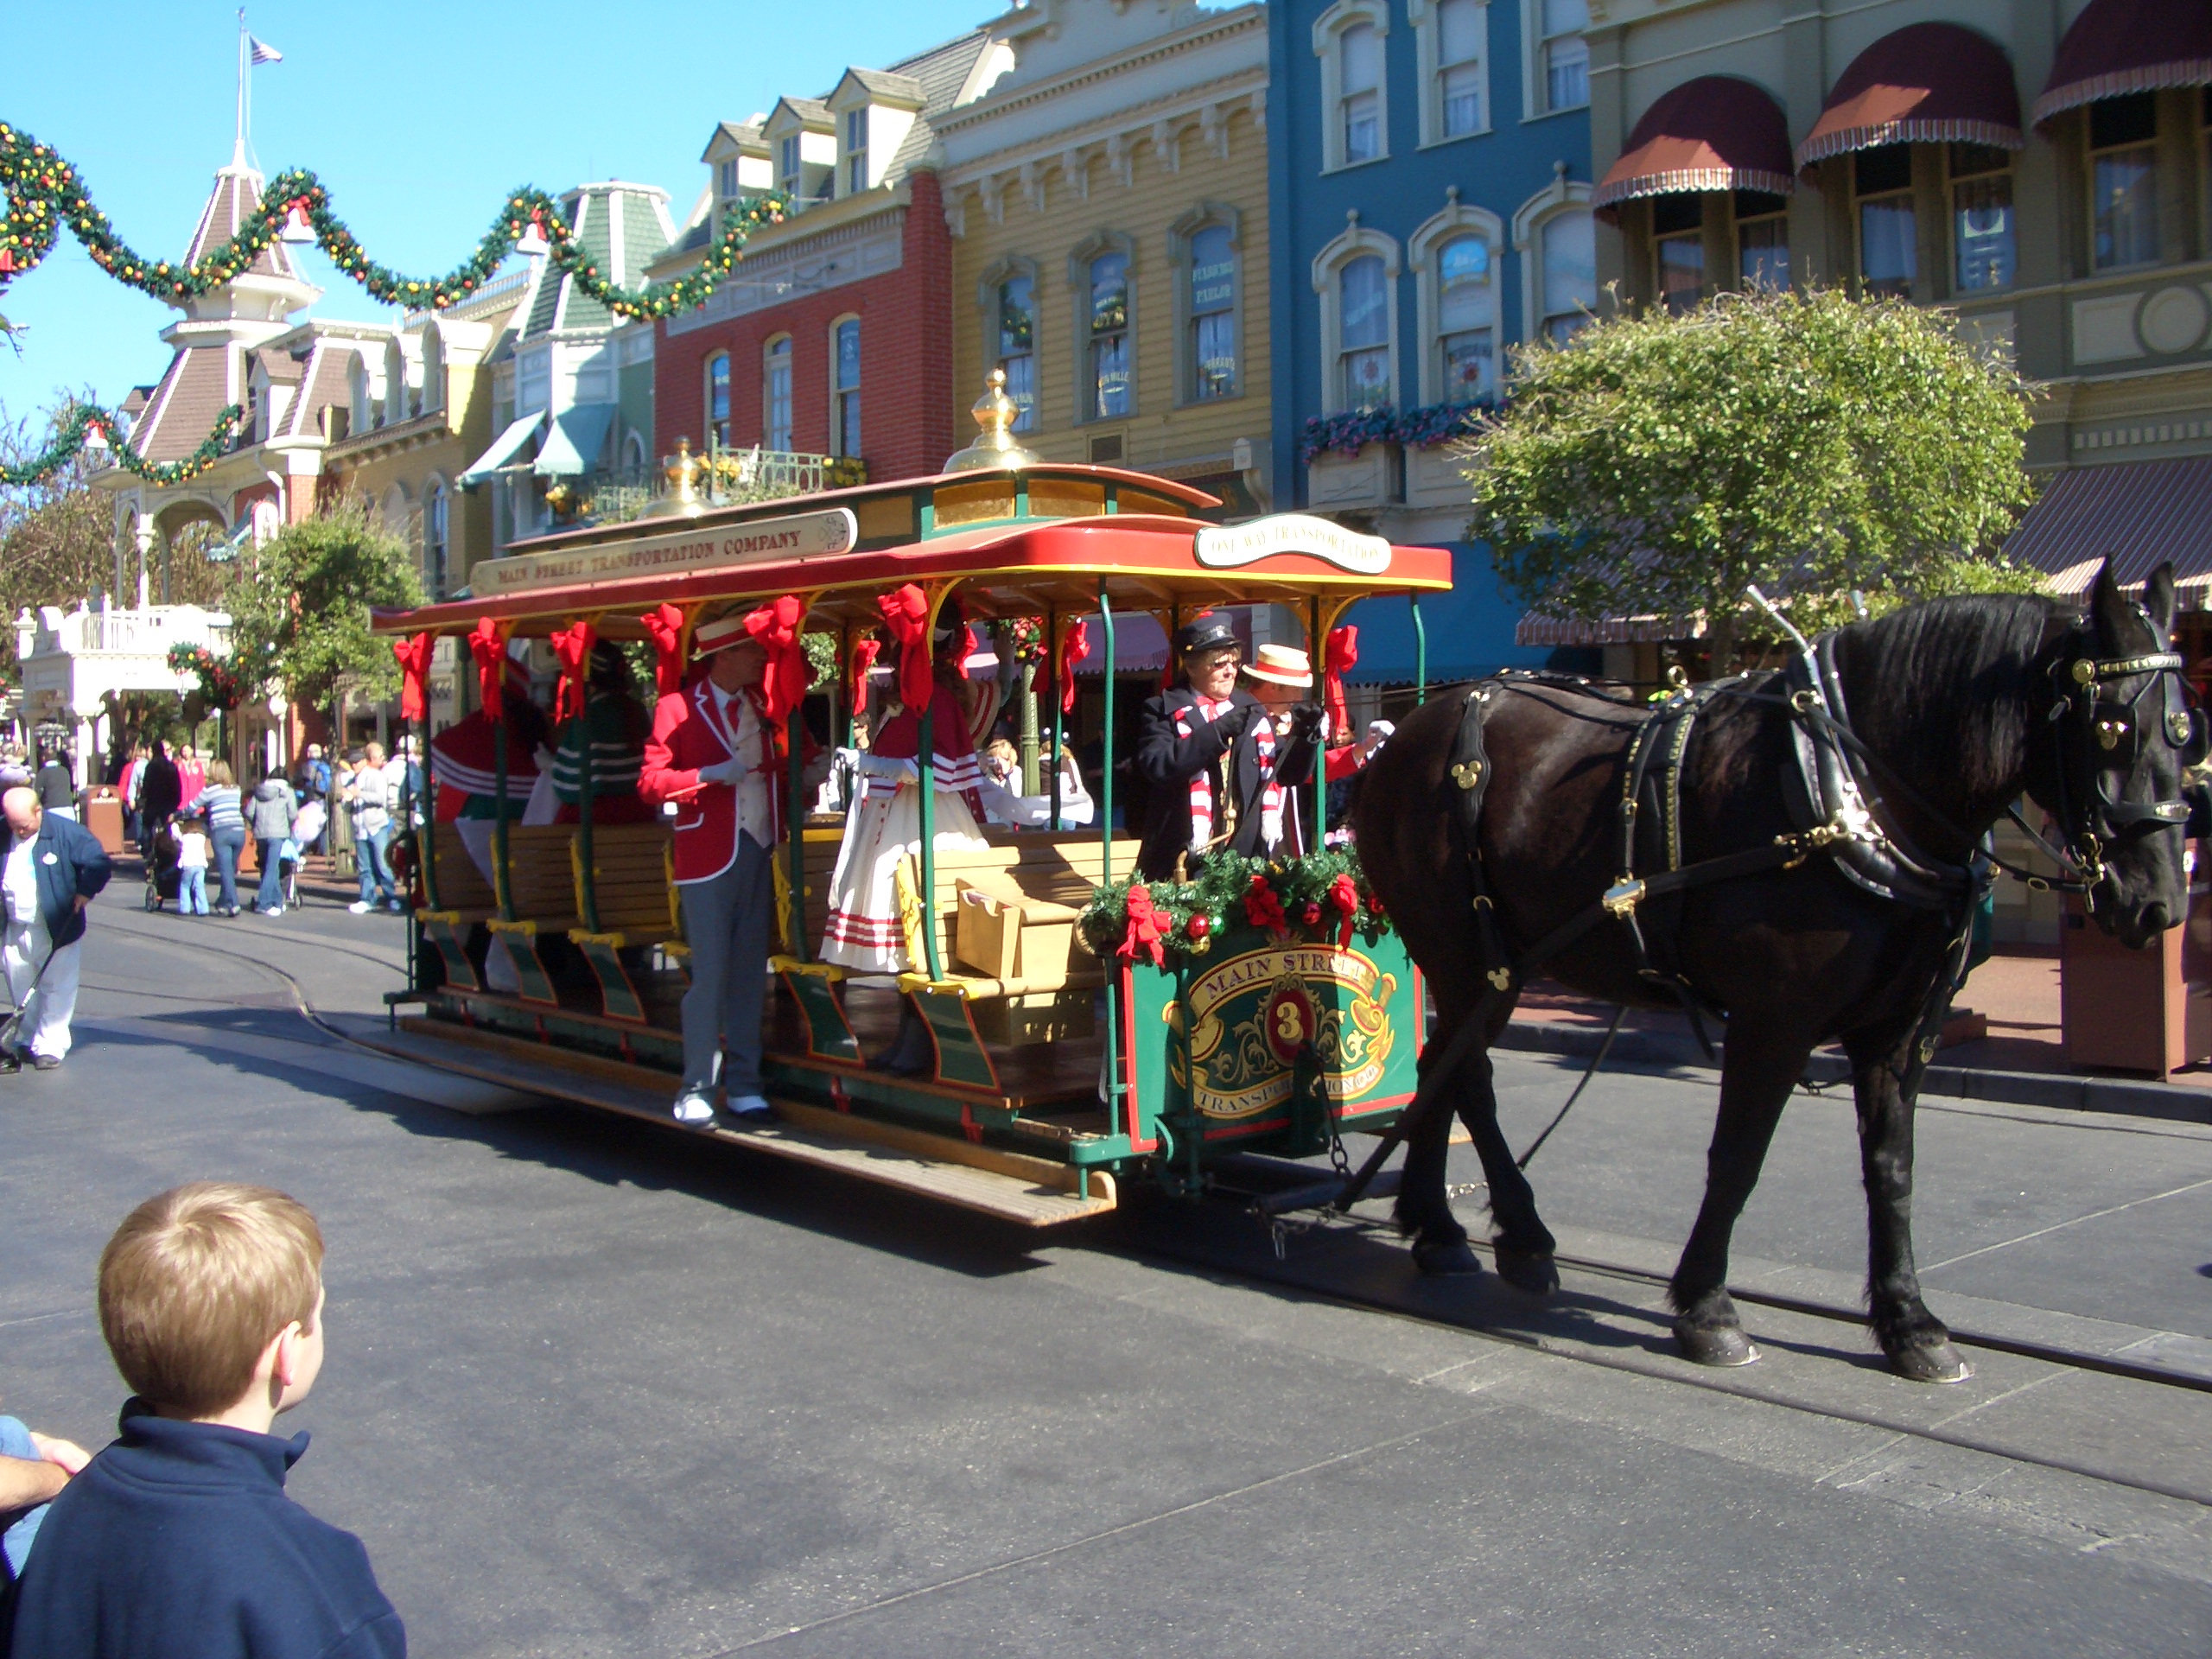 File:Main Street, Horse & Carriage 1.jpg - Wikimedia Commons